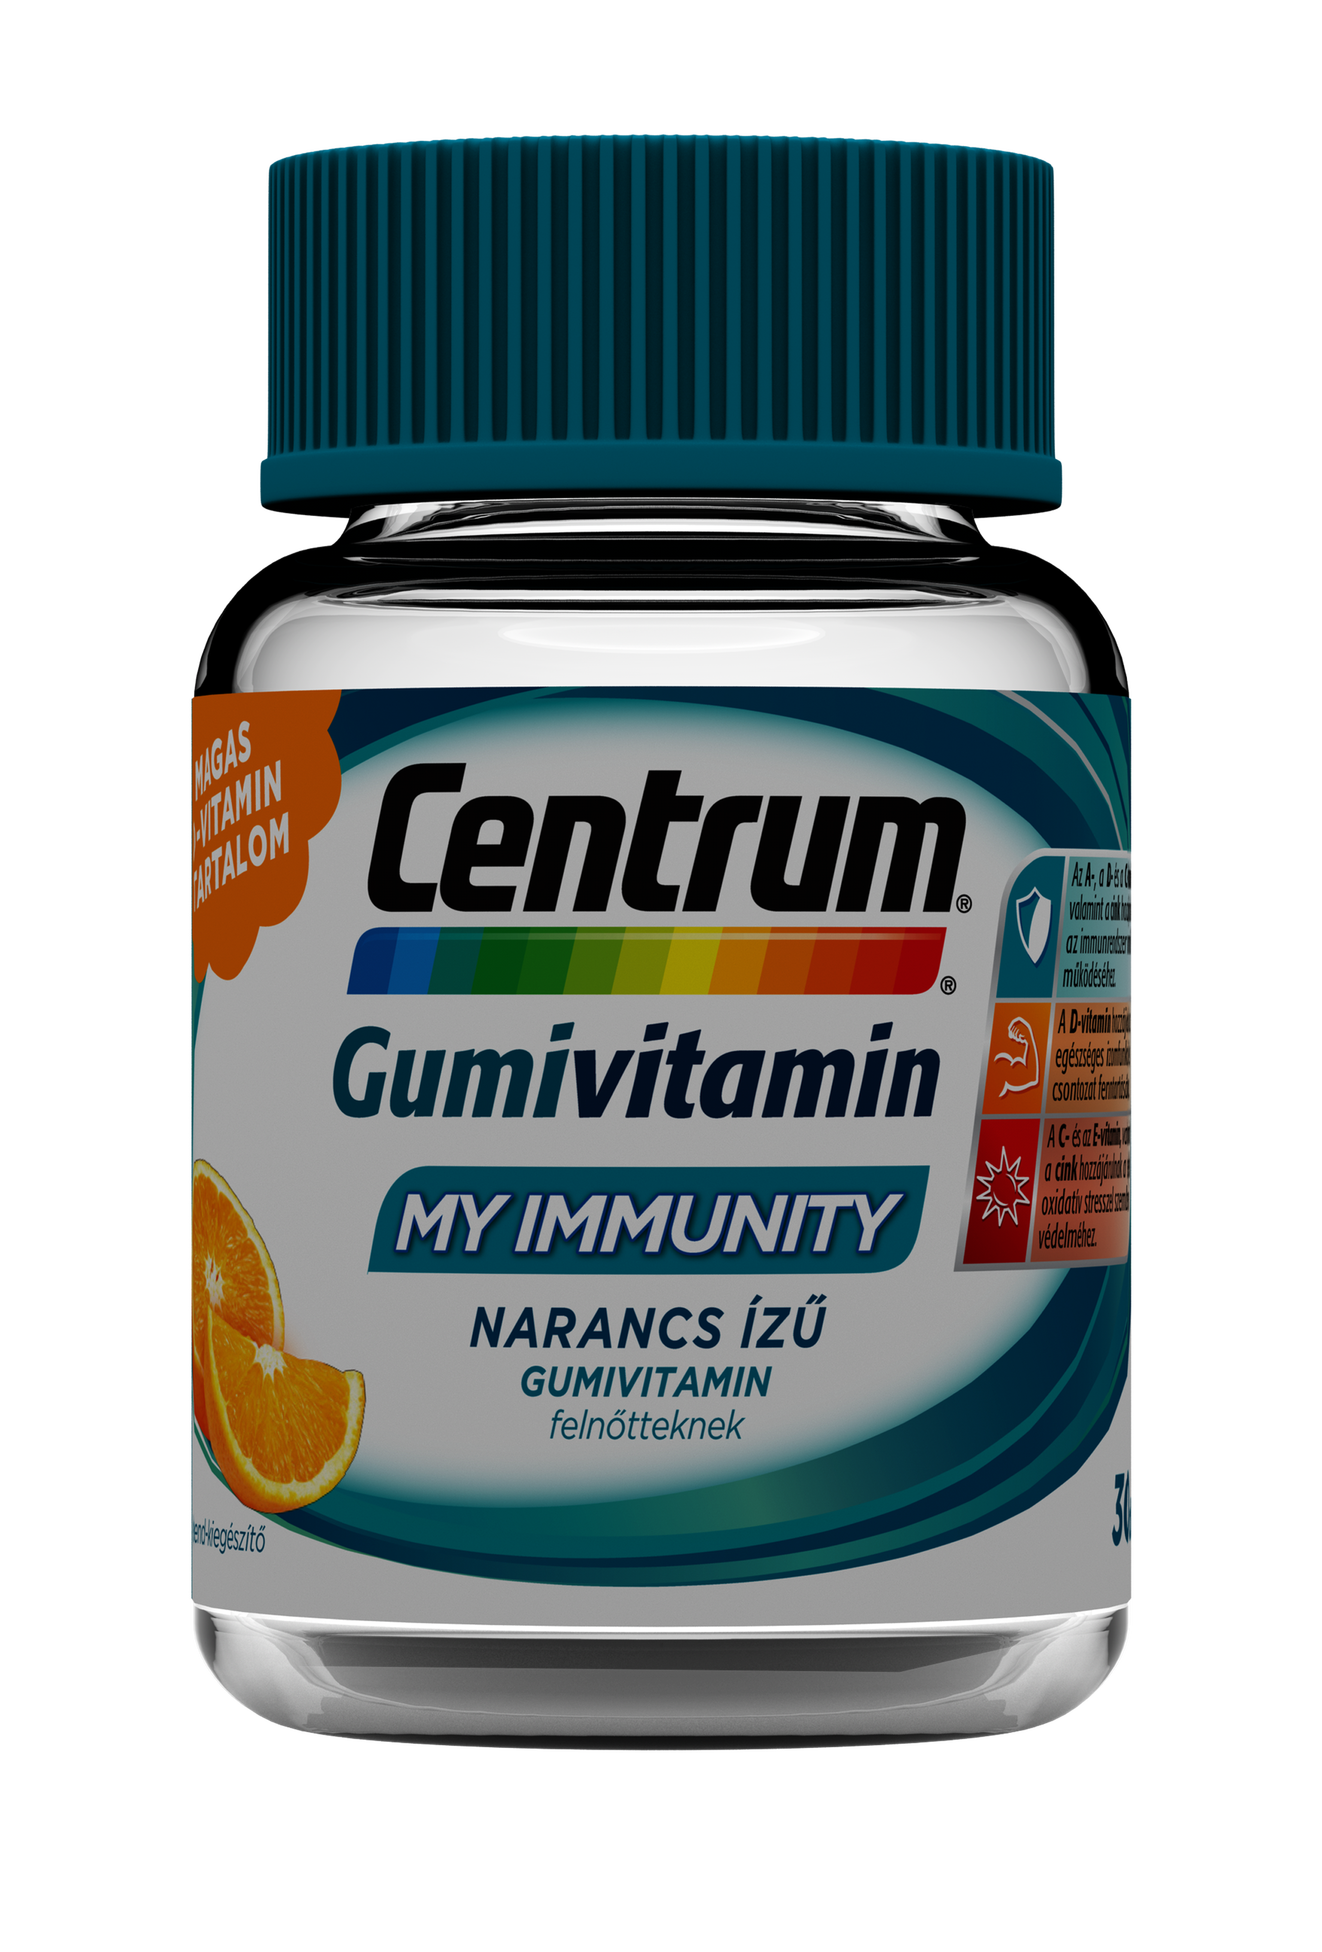 Centrum My Immunity gumivitamin narancs ízű